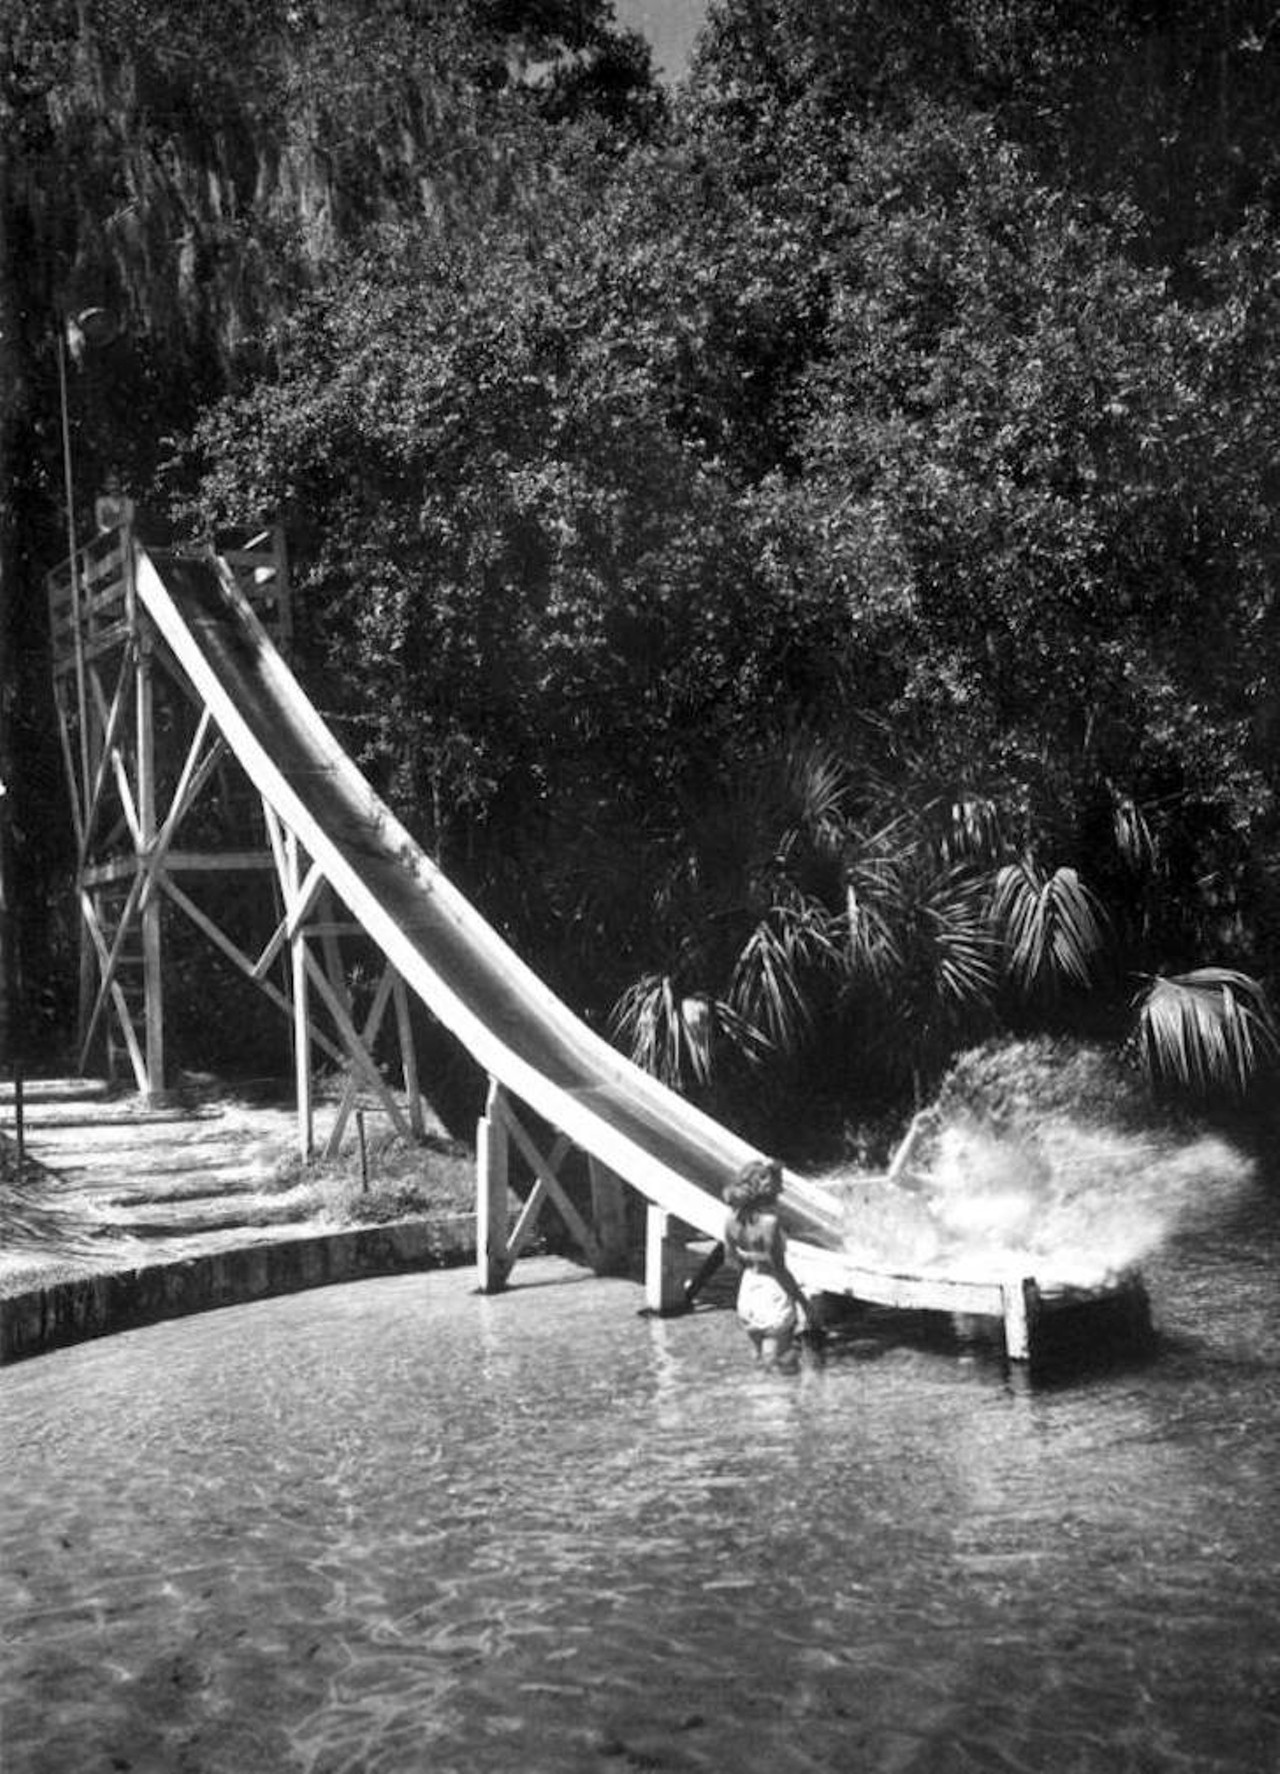 Visitors use the water slide - Sanlando Springs, 1946.